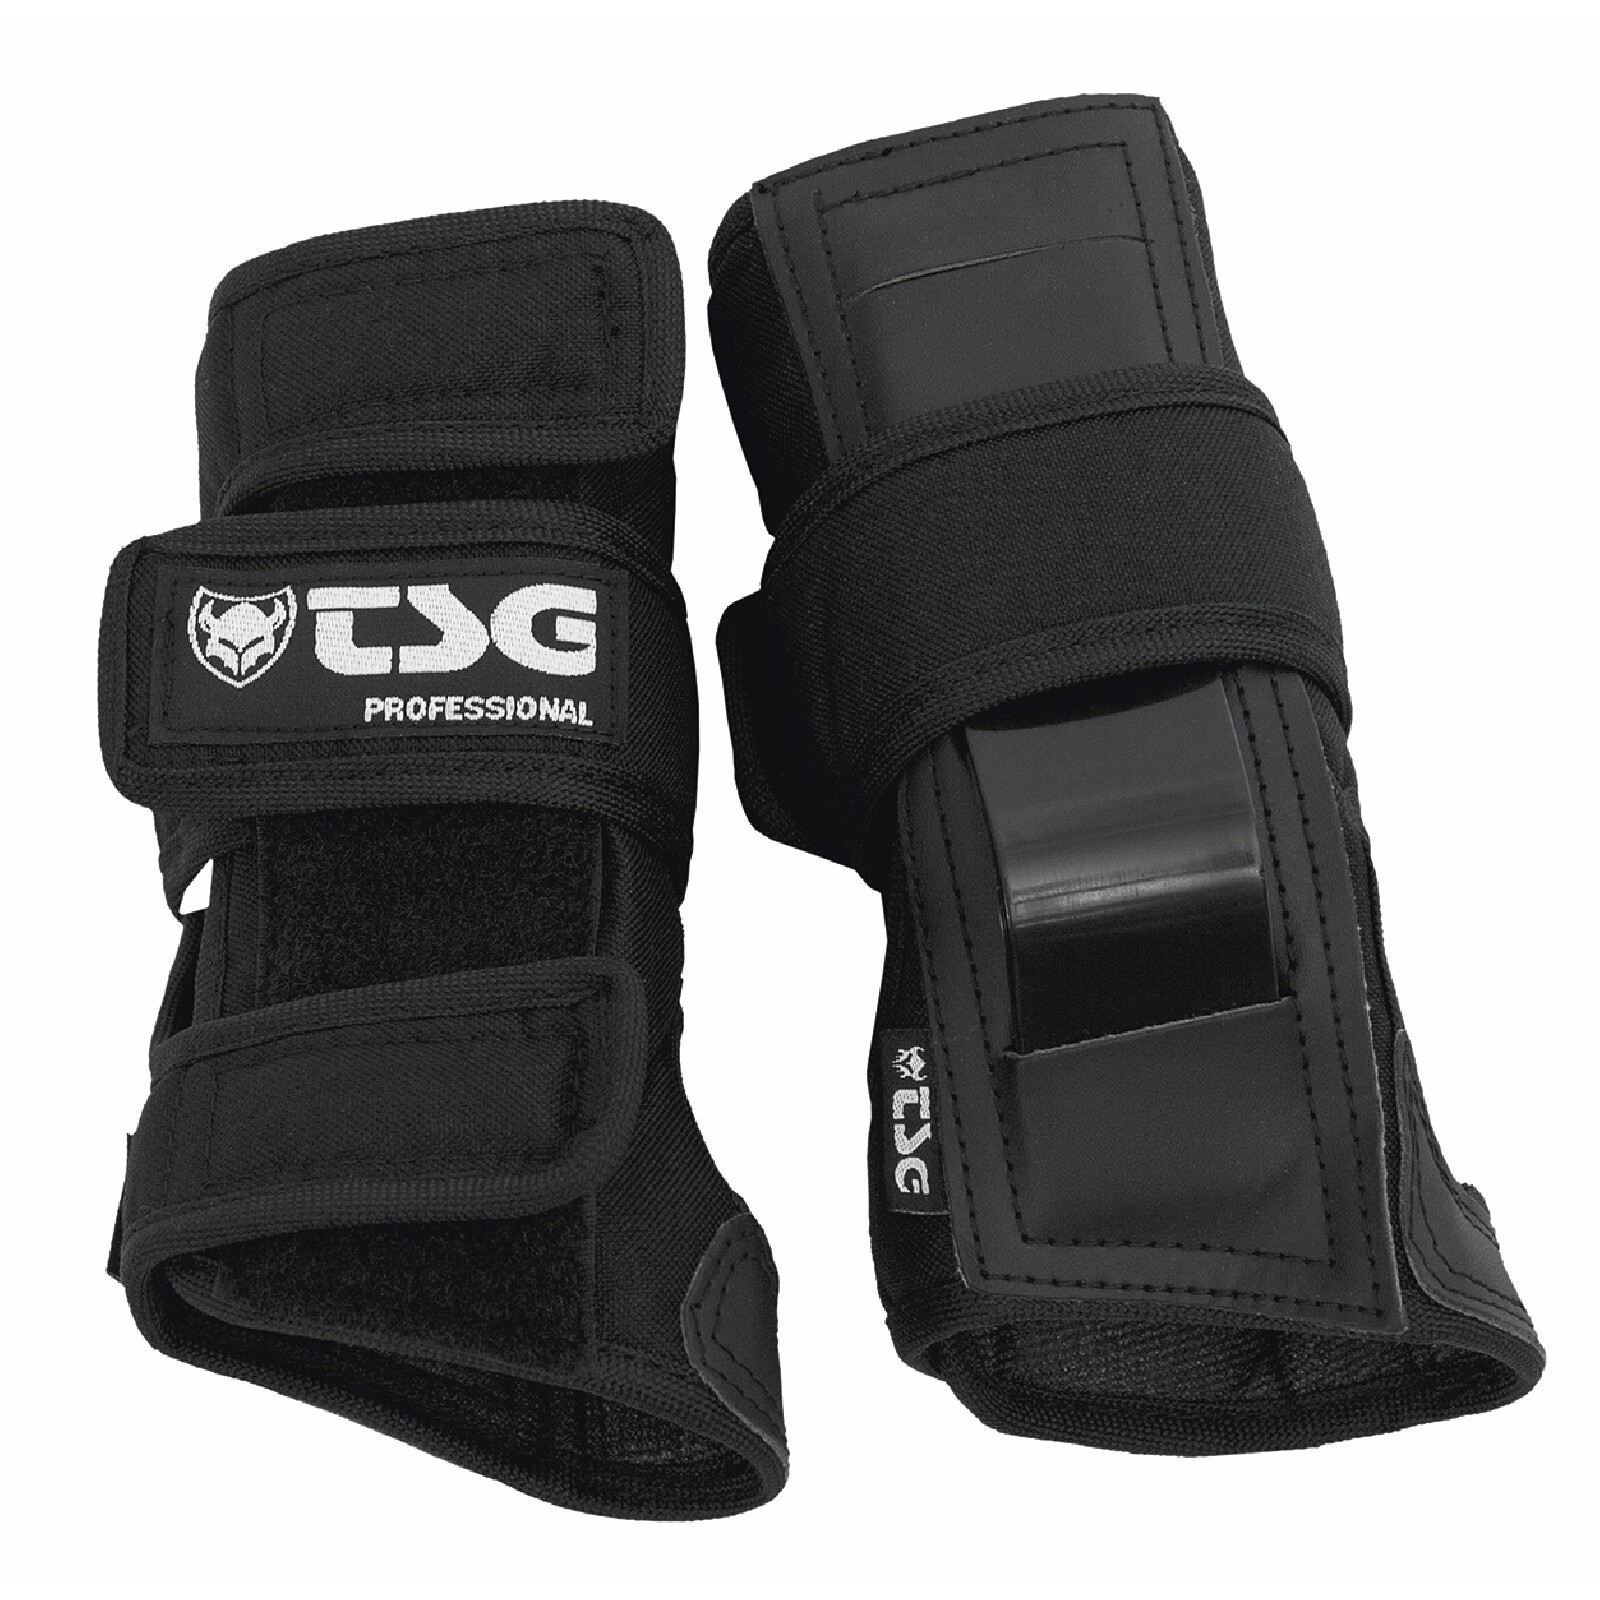 Protège-poignet TSG Professional